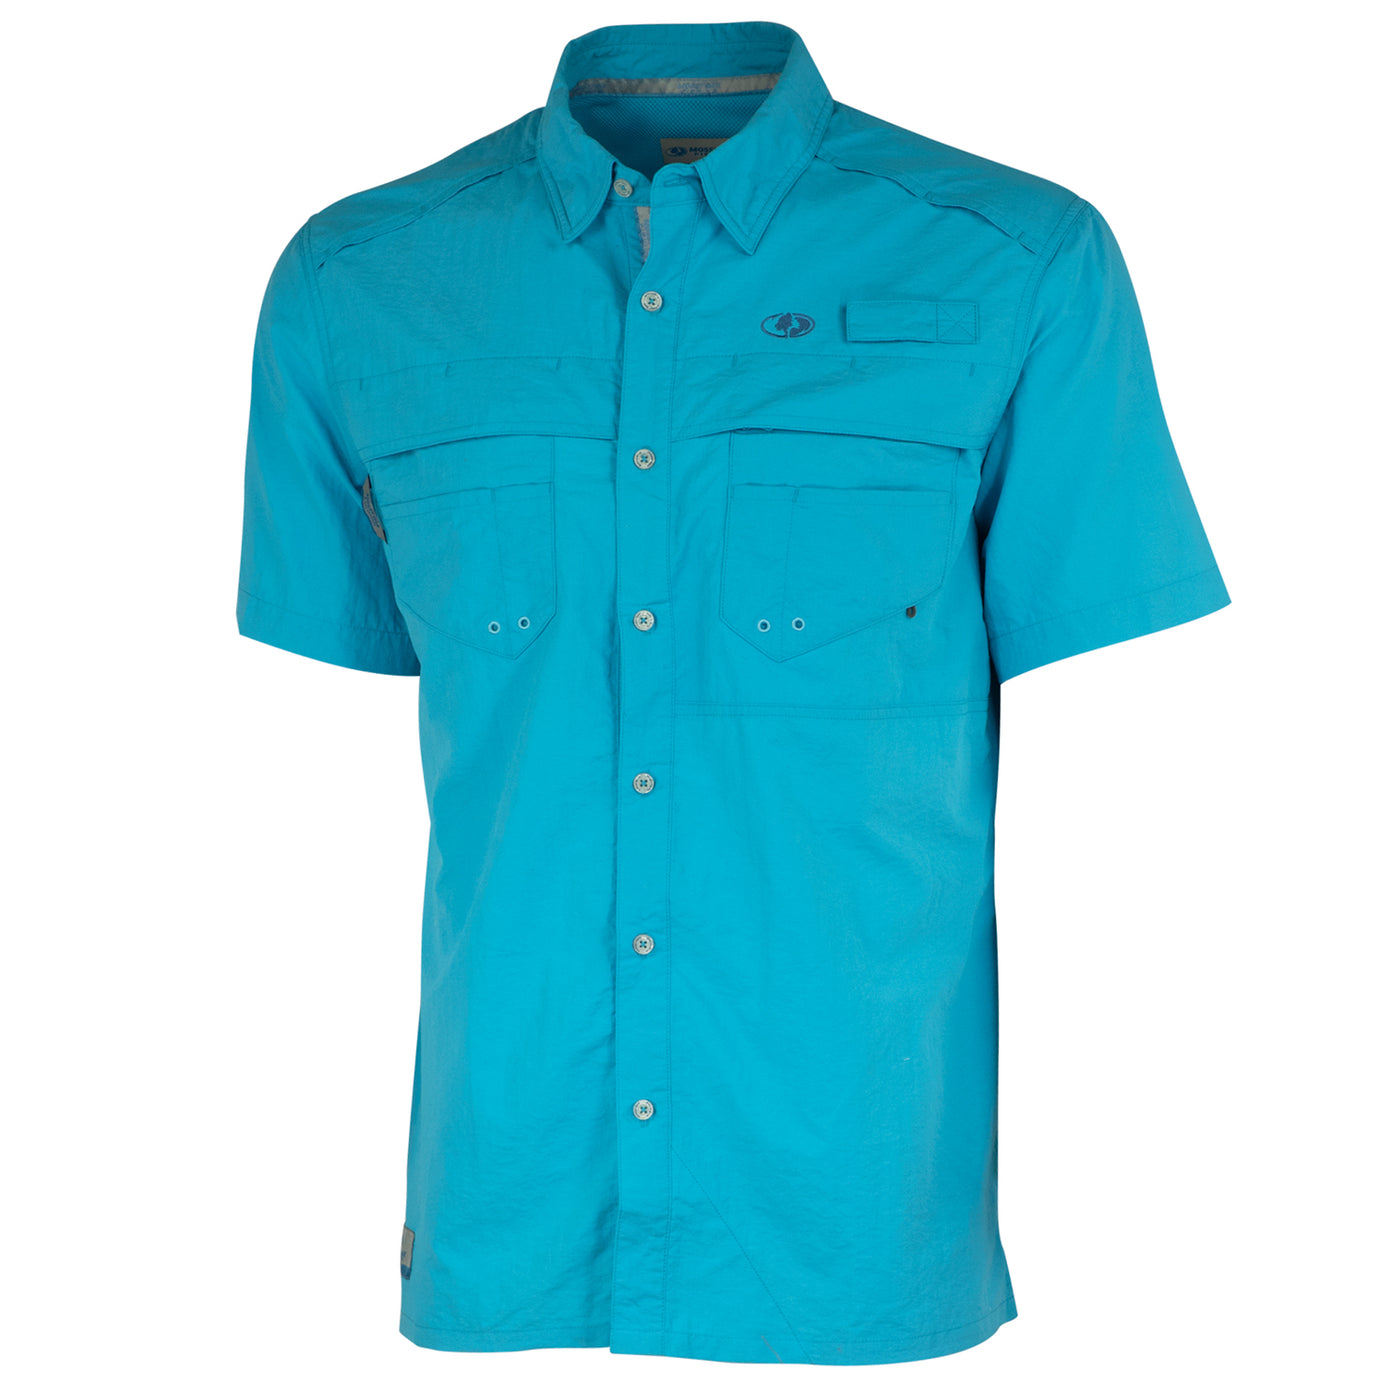 Buy Staghorn Men's Mossy Oak Fishing Short Sleeve Camo Shirt